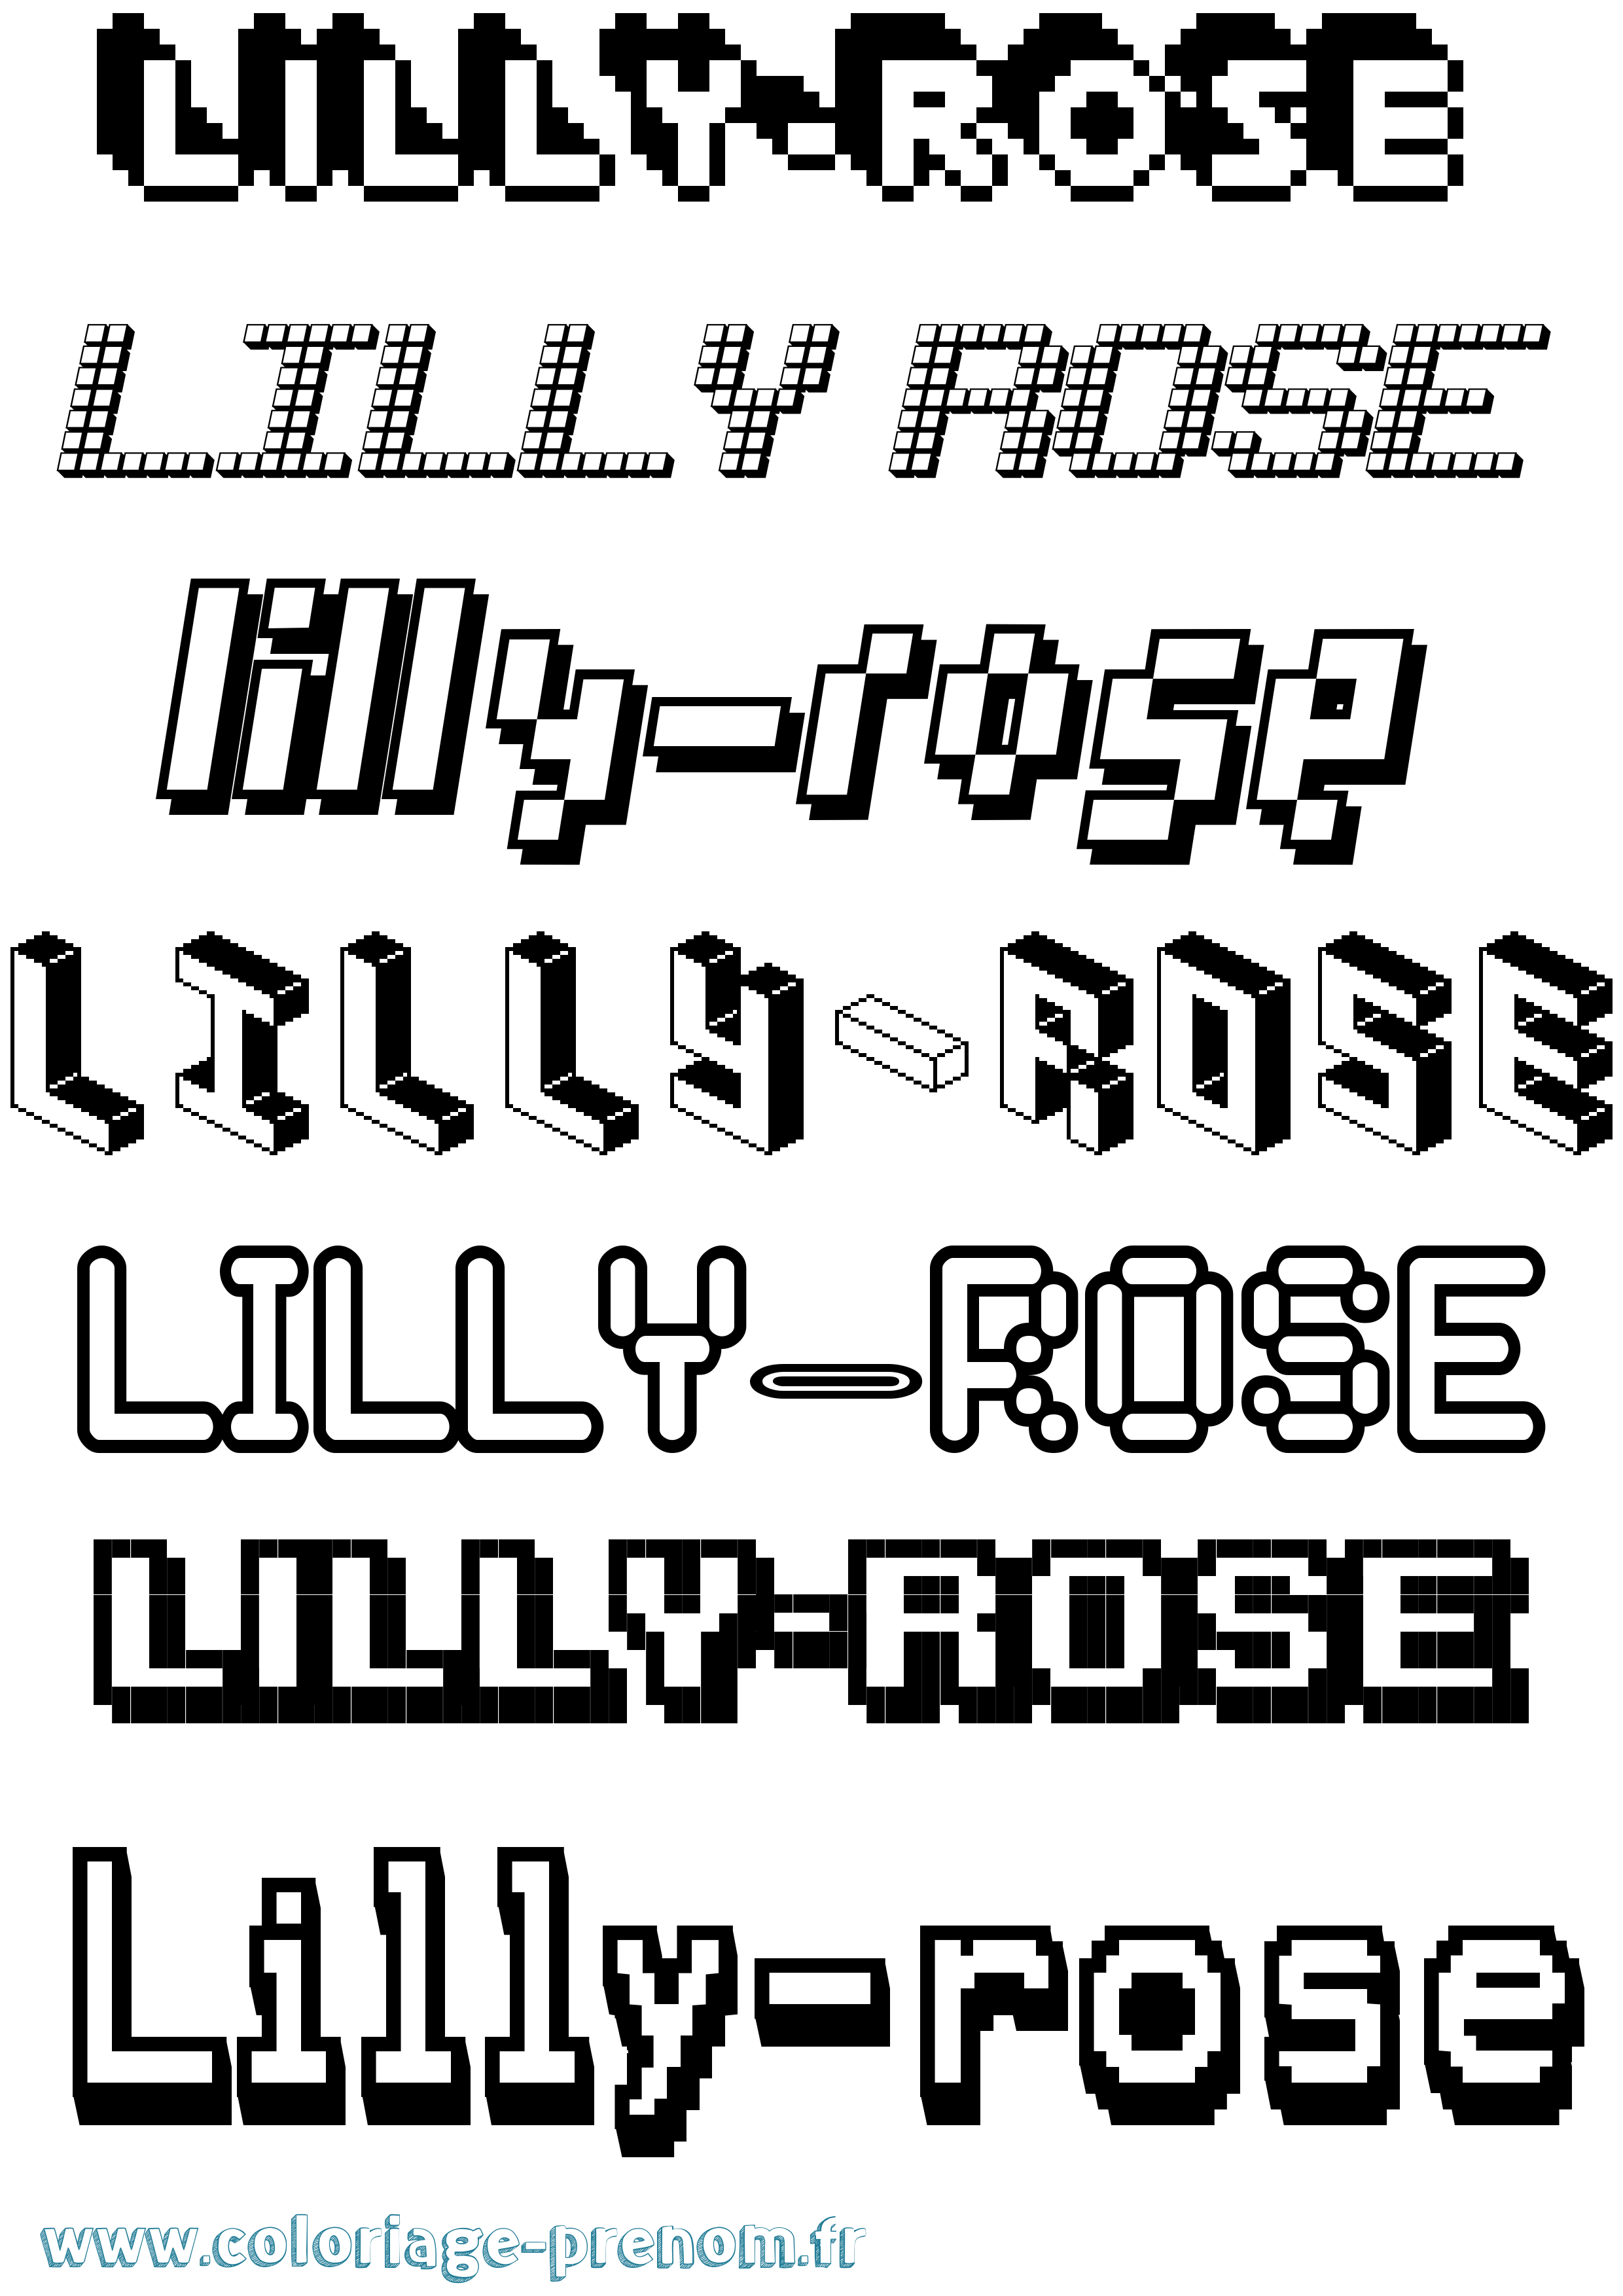 Coloriage prénom Lilly-Rose Pixel